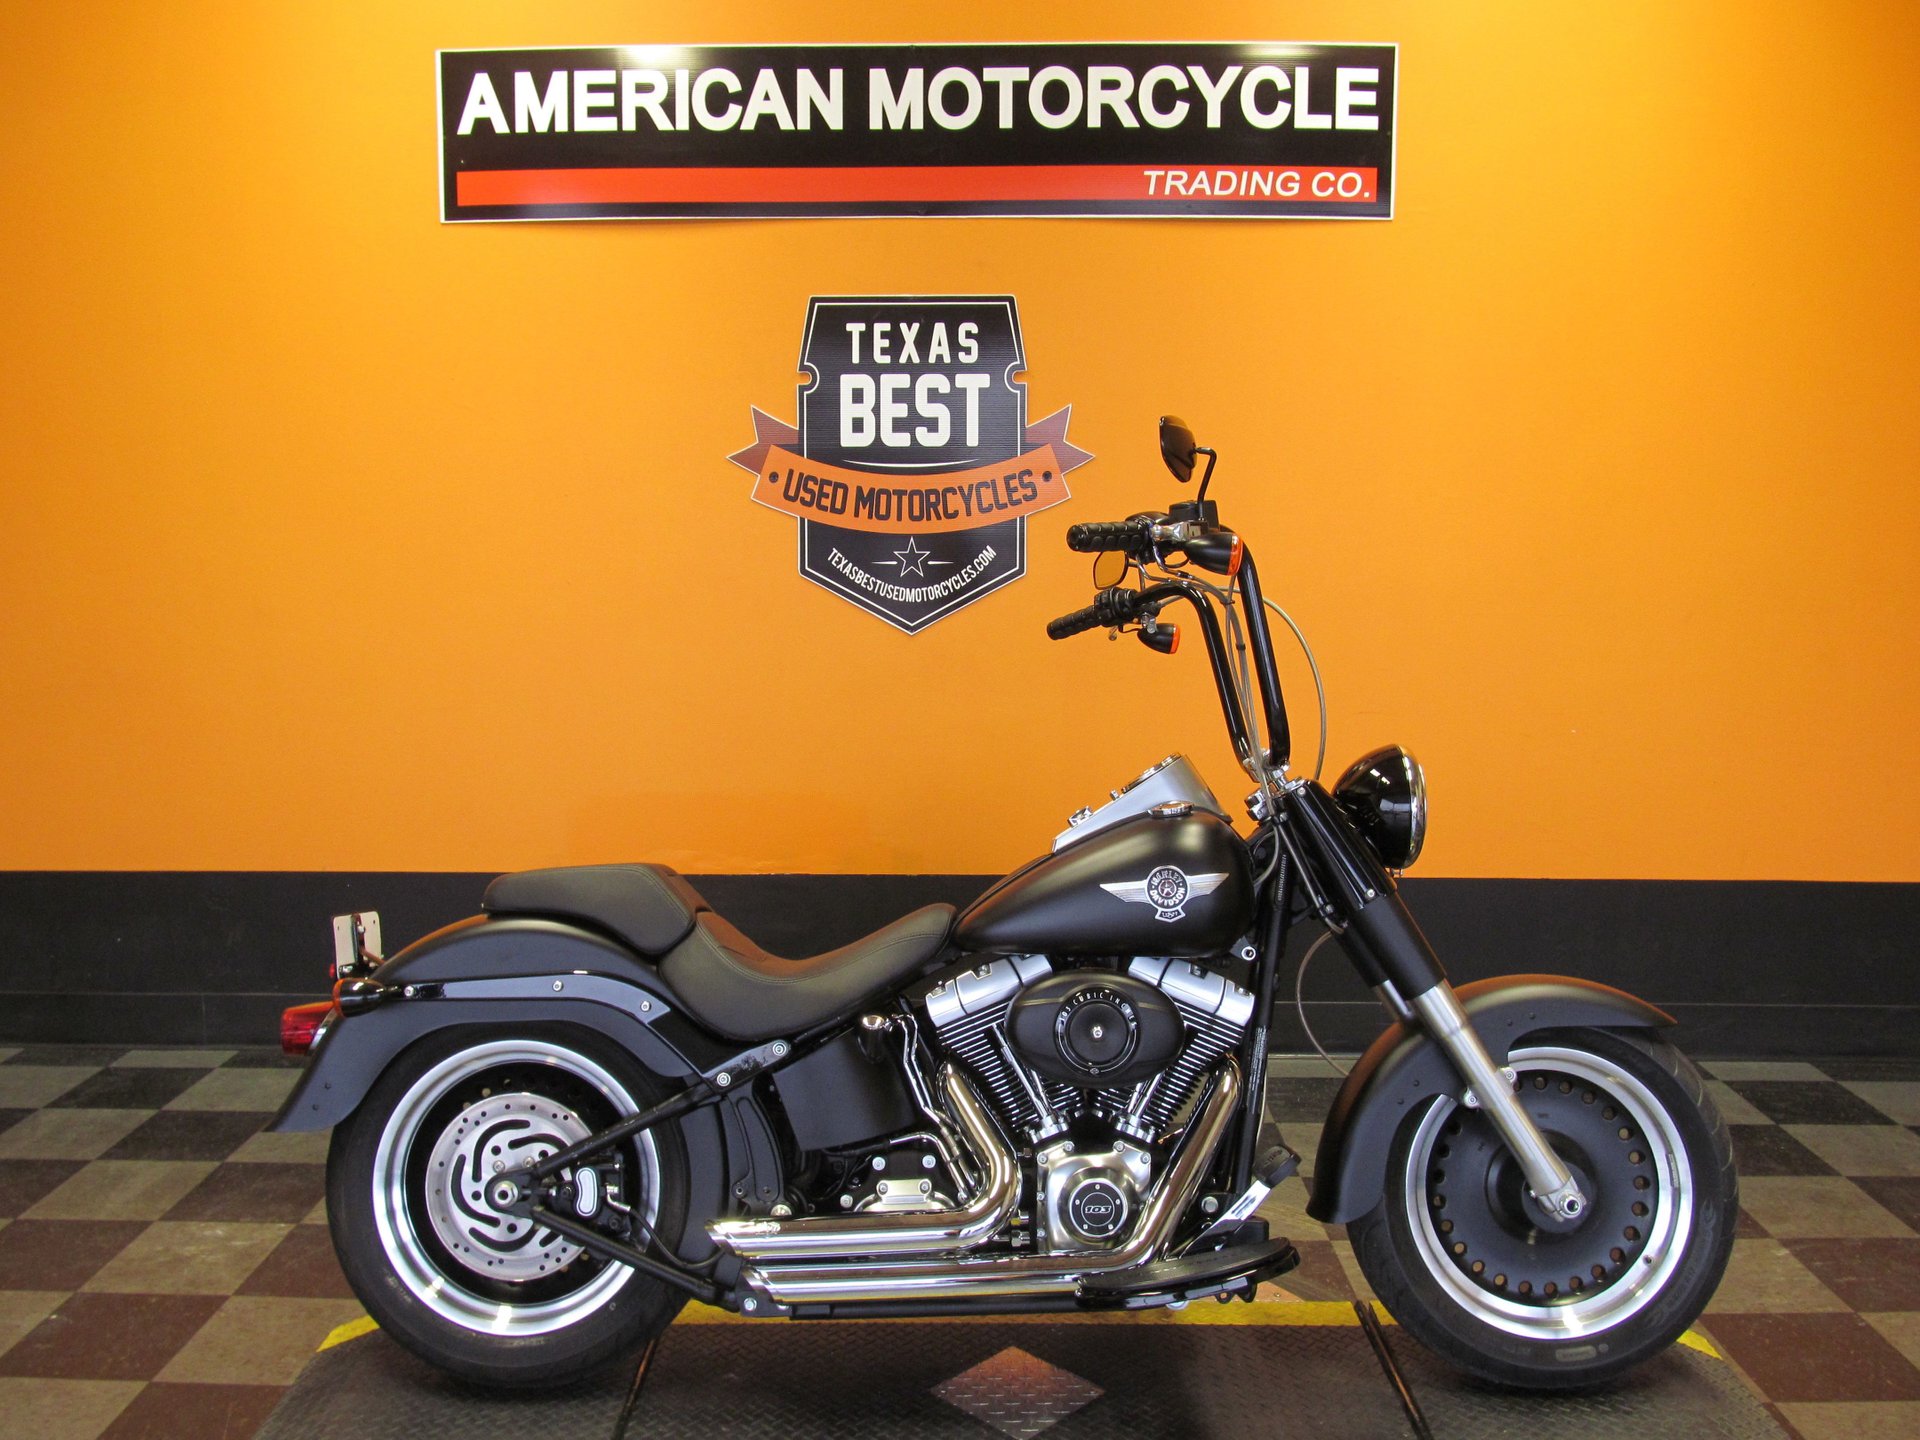 2013 Harley-Davidson Softail Fat Boy | American Motorcycle Trading Company  - Used Harley Davidson Motorcycles